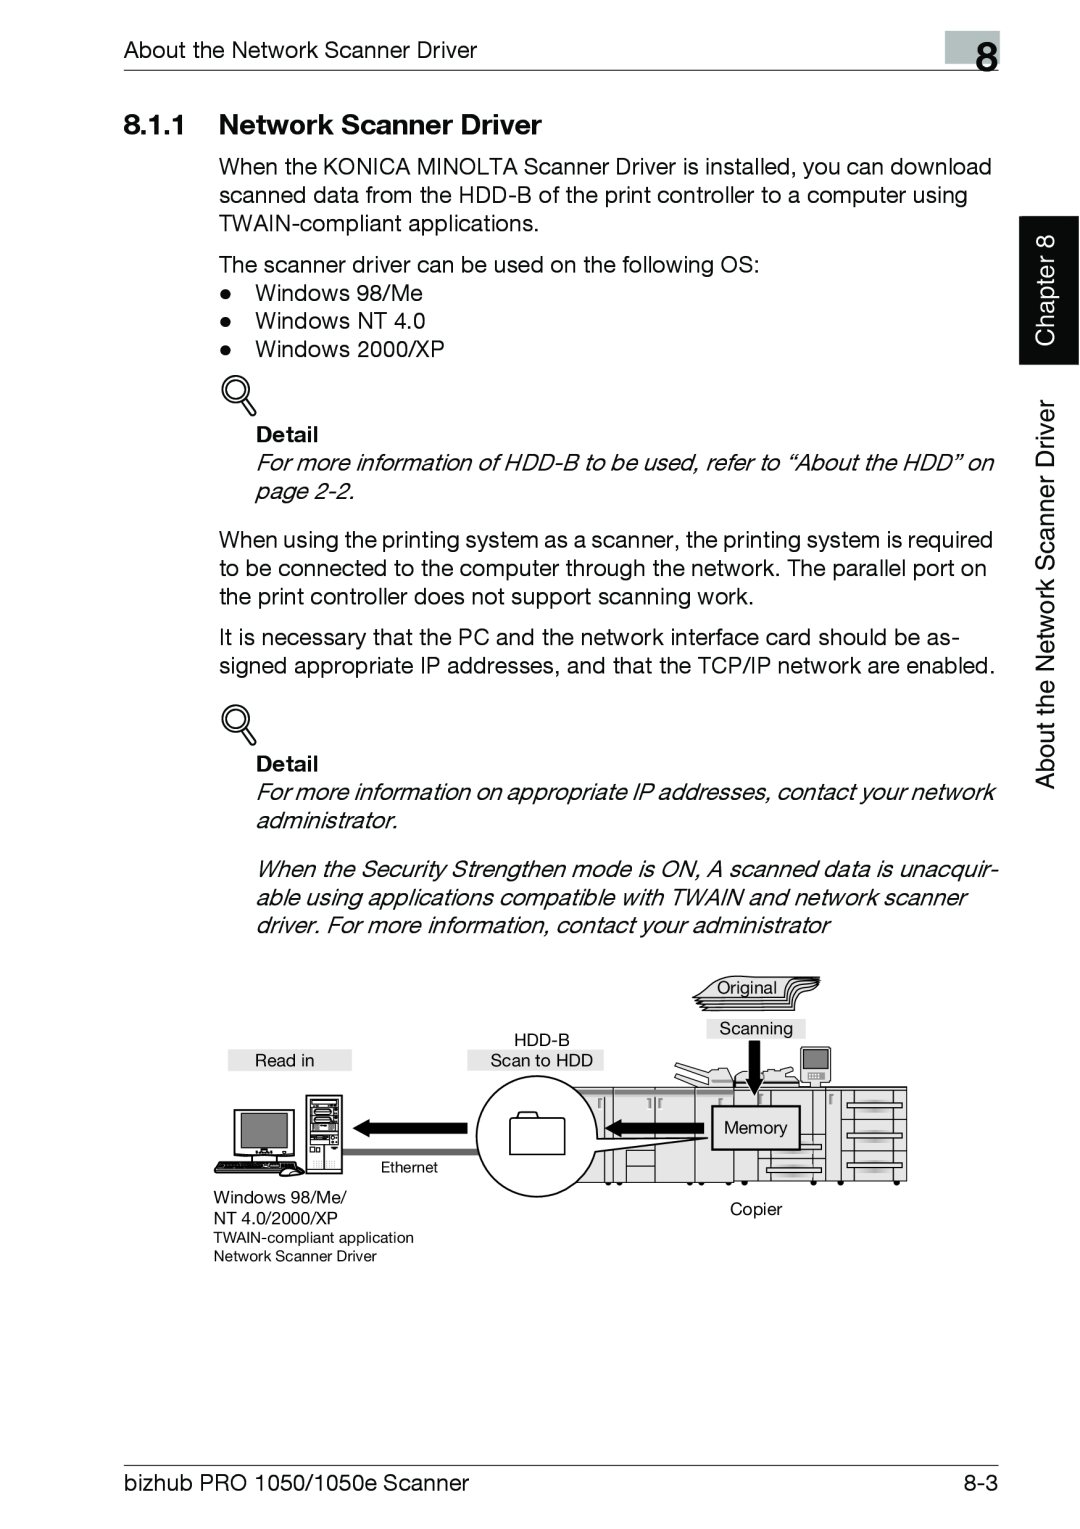 Konica Minolta 1050E appendix 8.1.1Network Scanner Driver, Chapter, About the Network Scanner Driver, Detail 